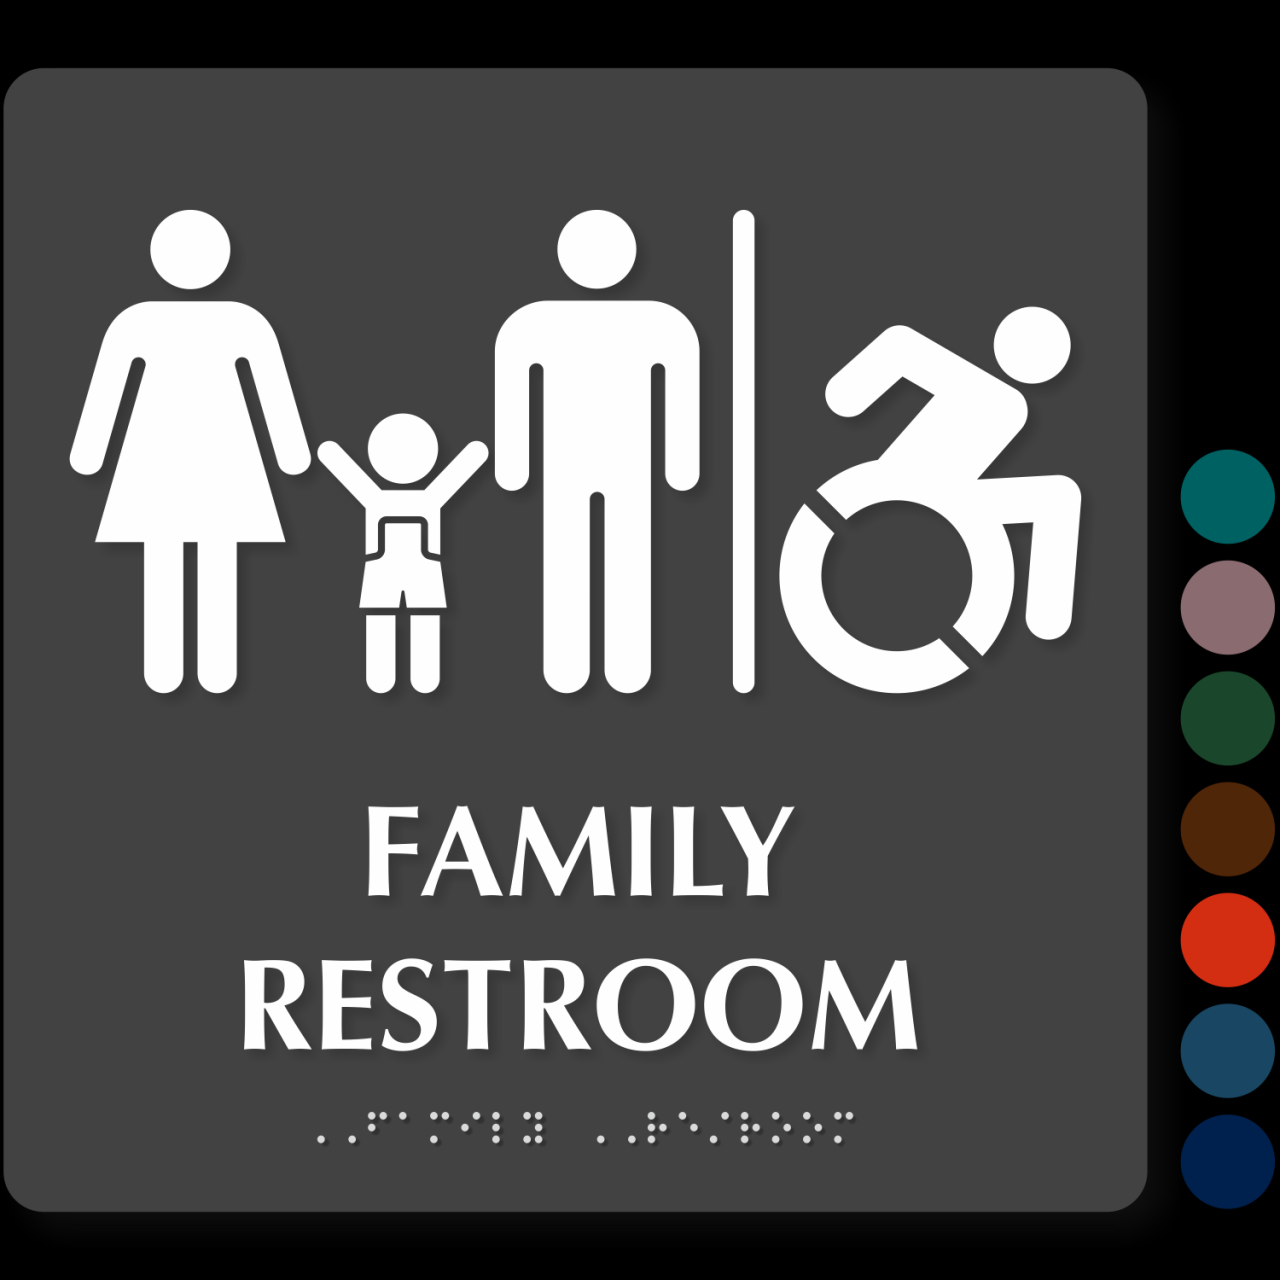 Family restroom sign